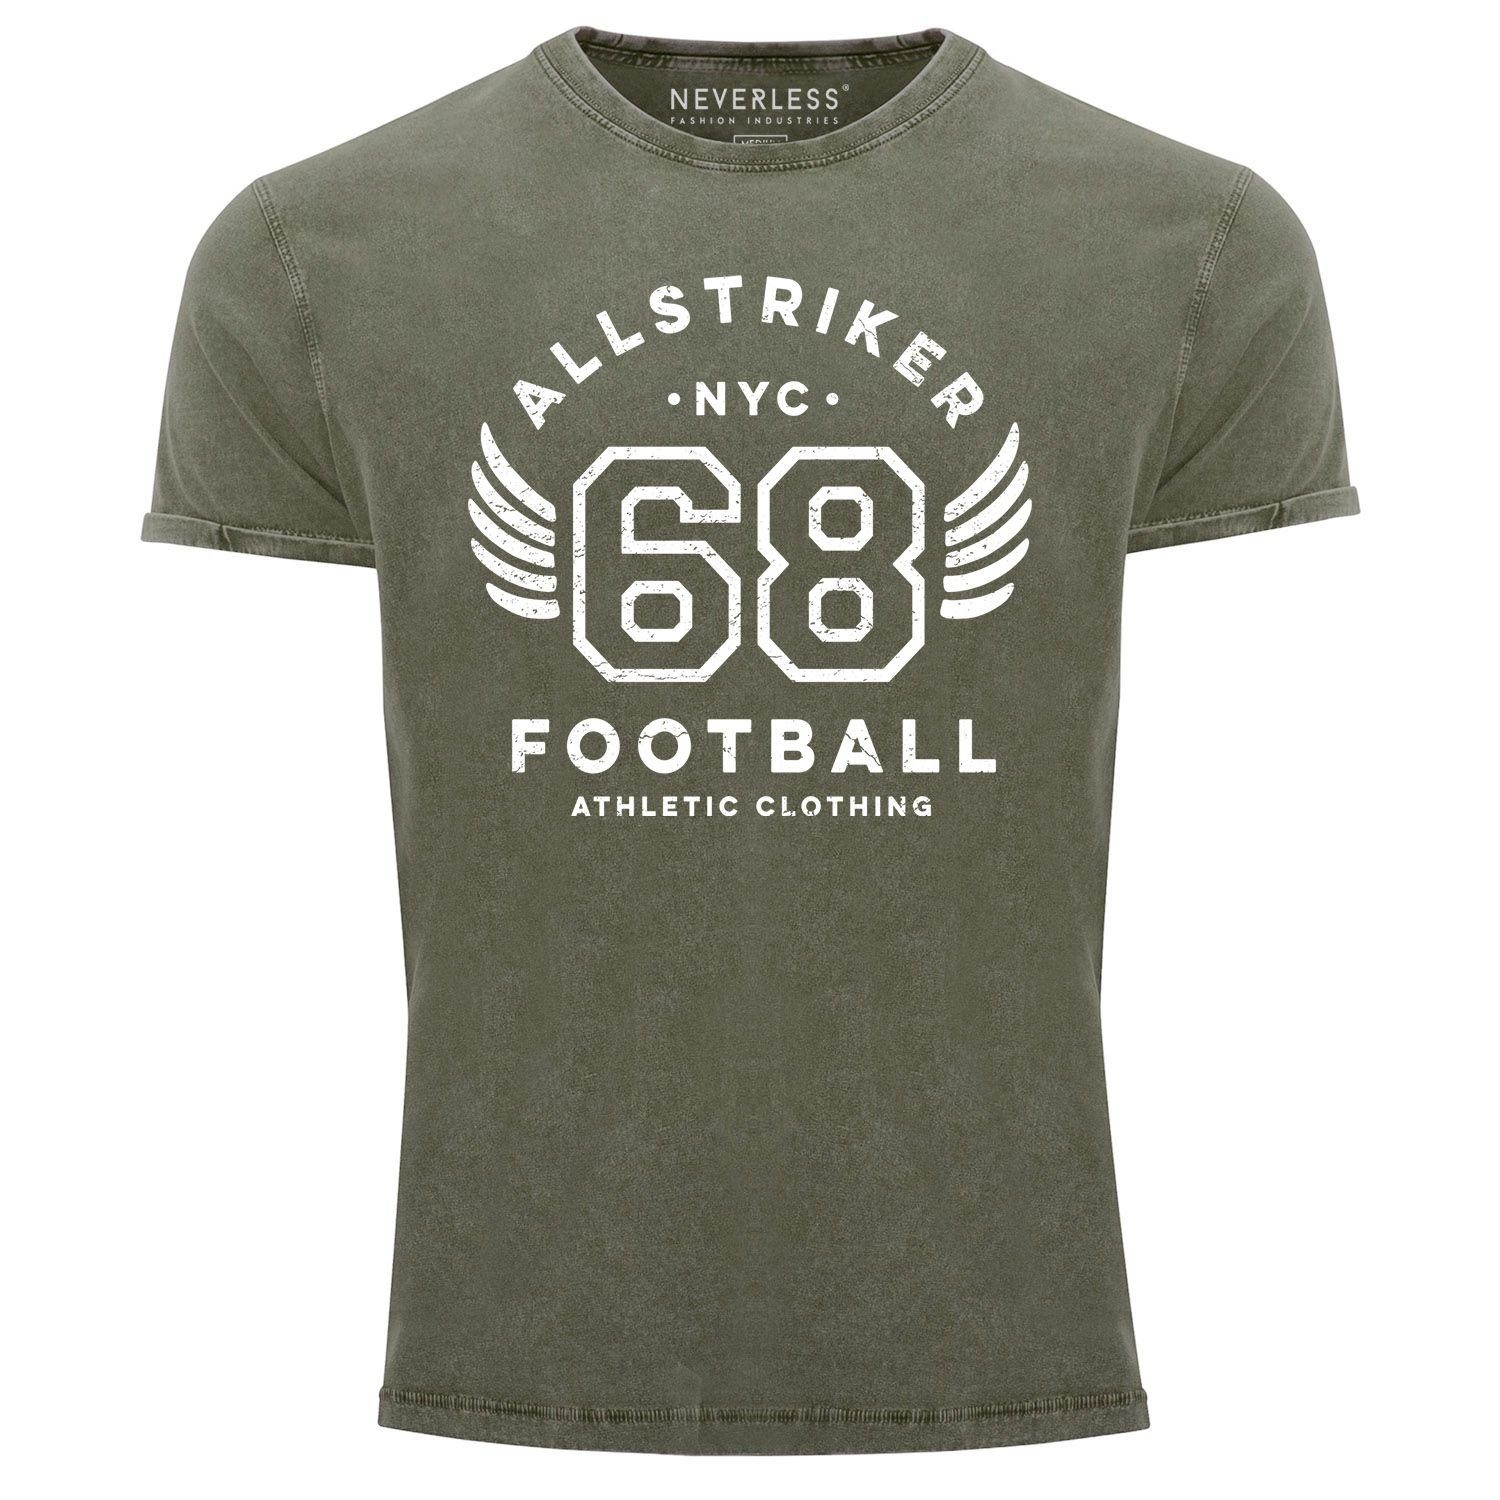 Neverless Print-Shirt Herren Vintage Shirt College NYC 68 Football Athletic Clothing Vintage Printshirt T-Shirt Used Look Slim Fit Neverless® mit Print oliv